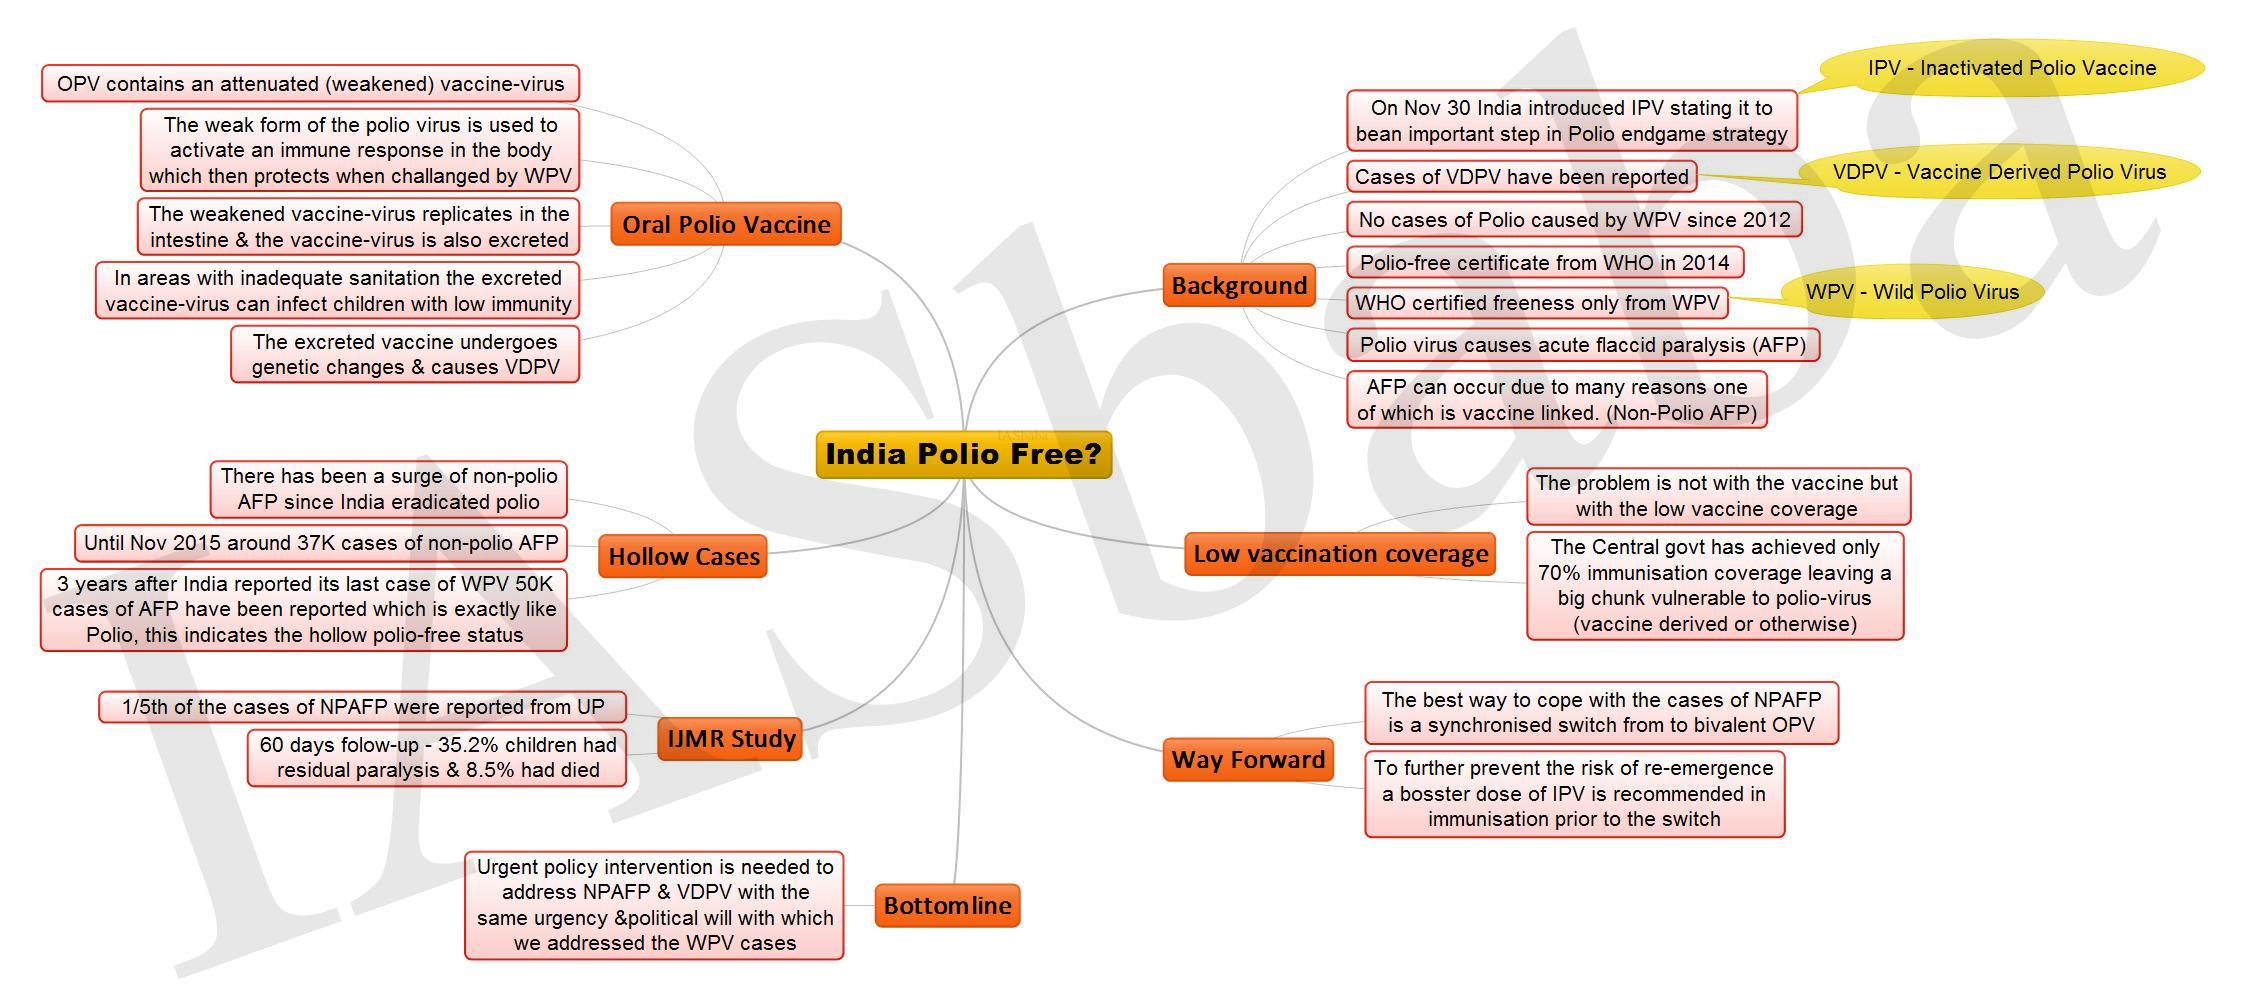 India Polio Free JPEG